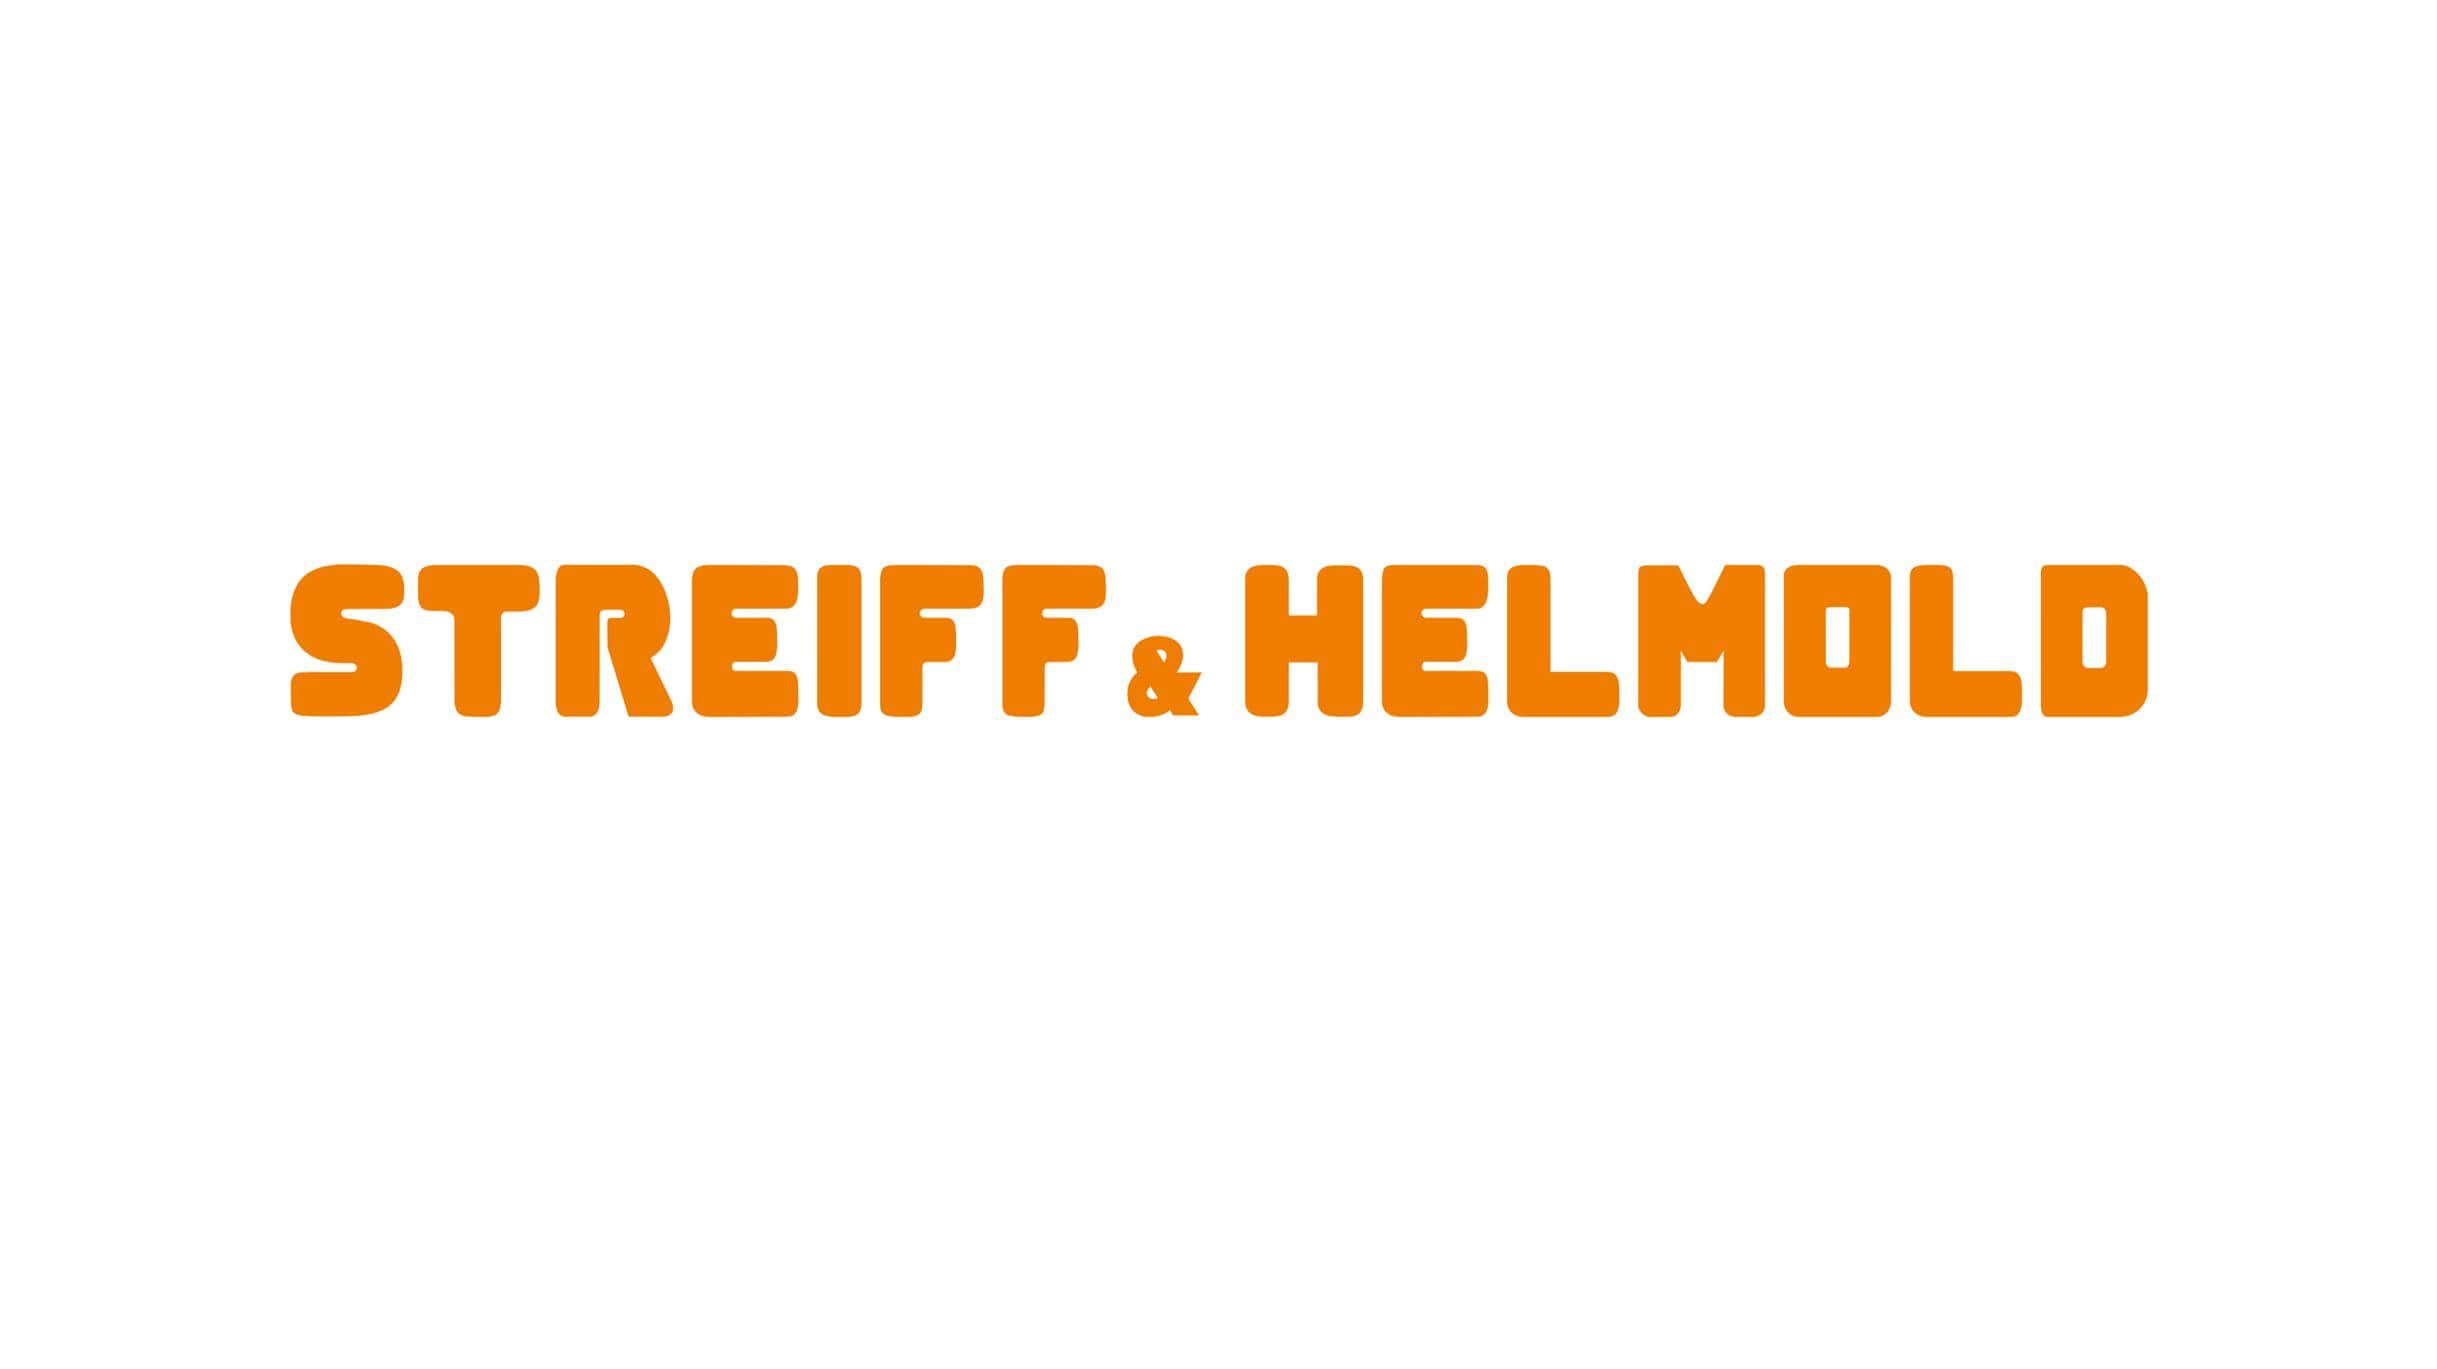 Streiff & Helmhold